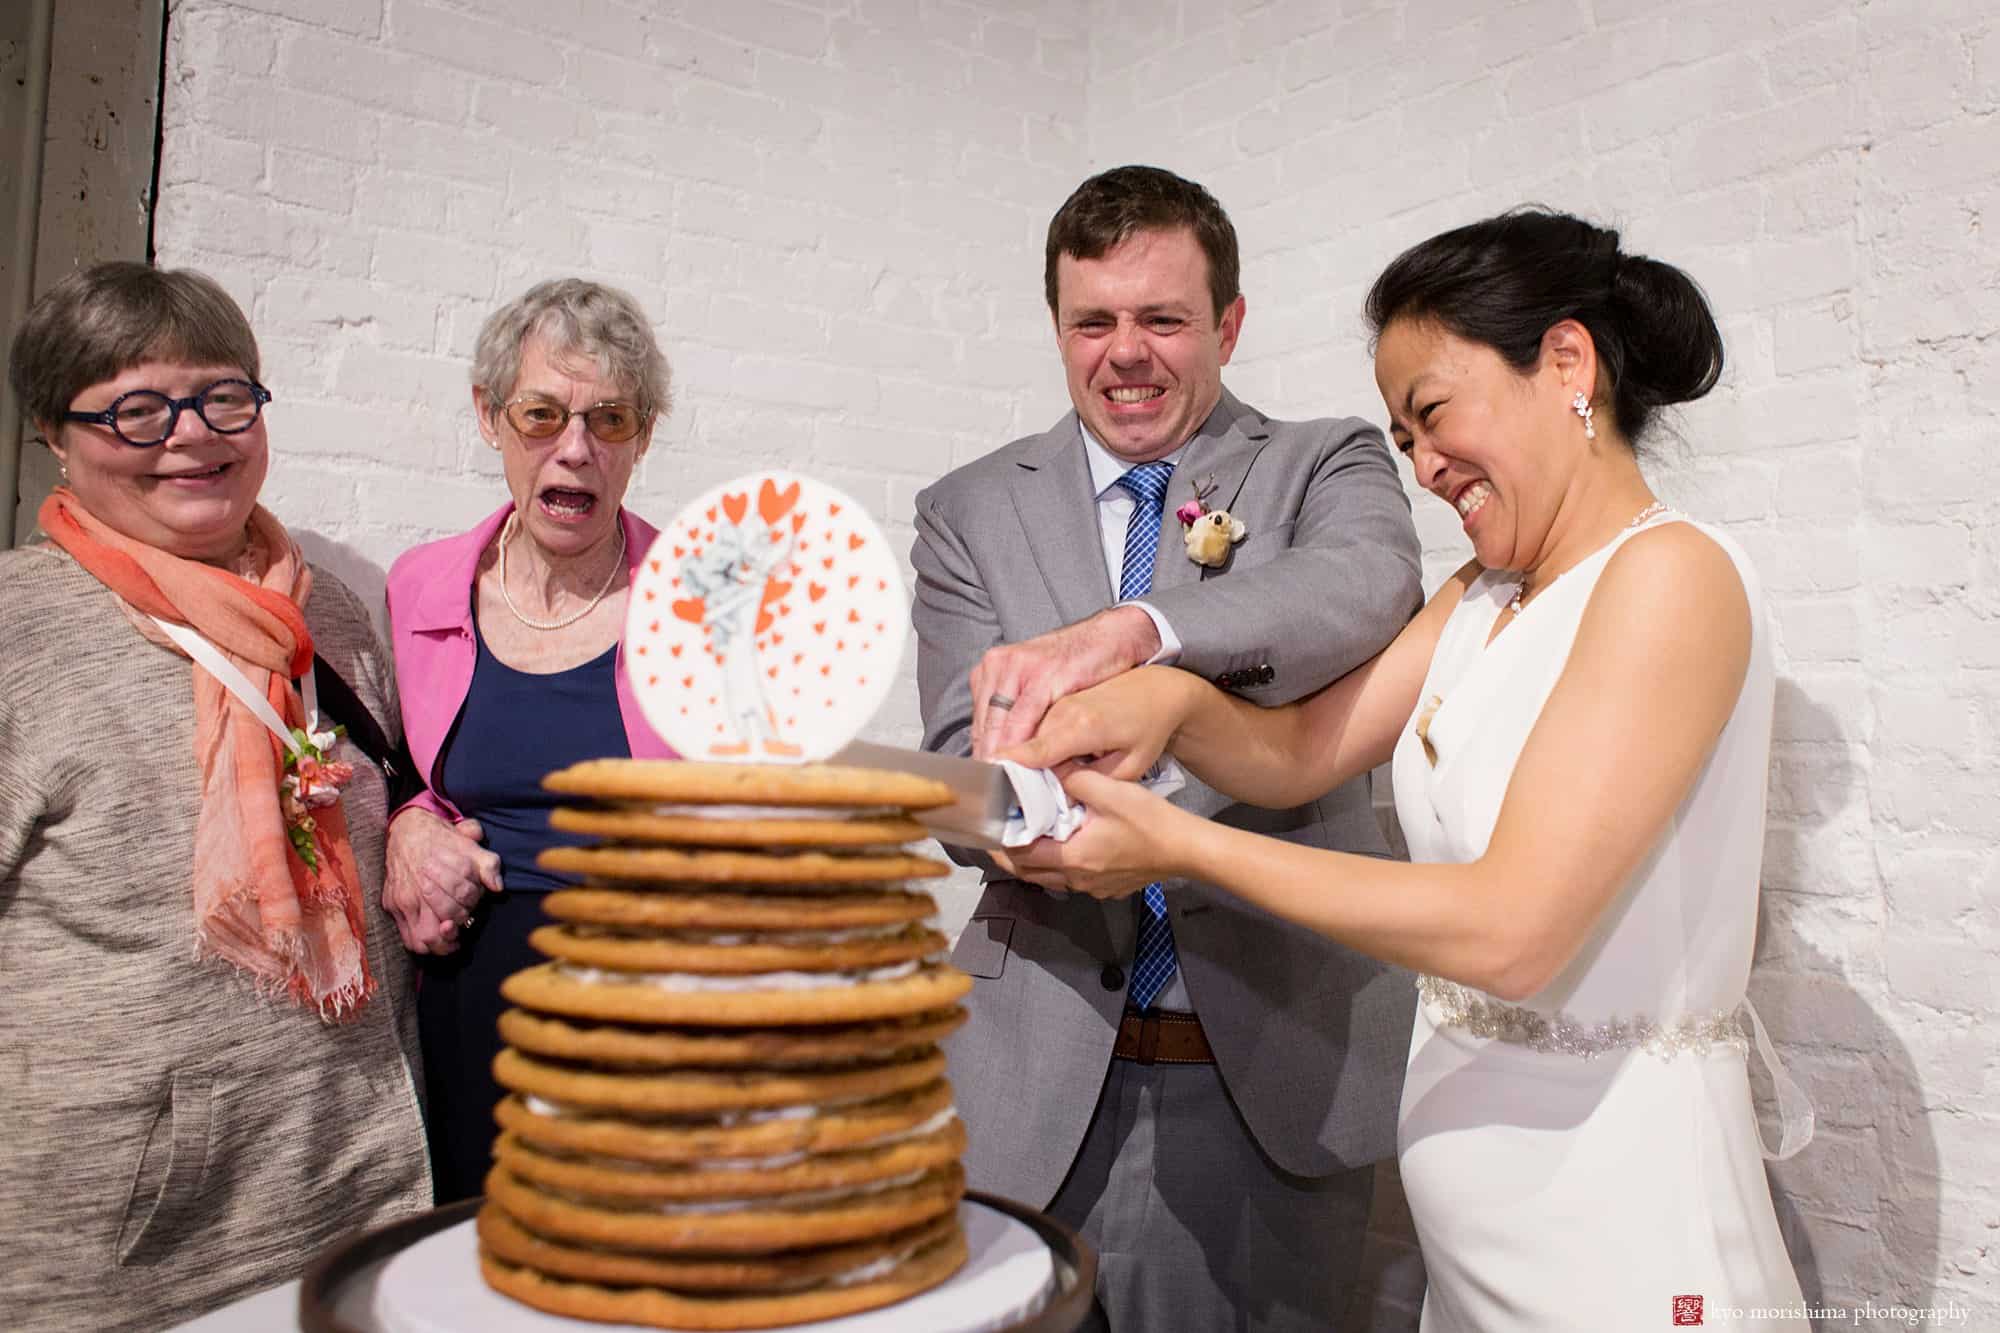 47 Small Wedding Cakes And Their Alternatives - Weddingomania